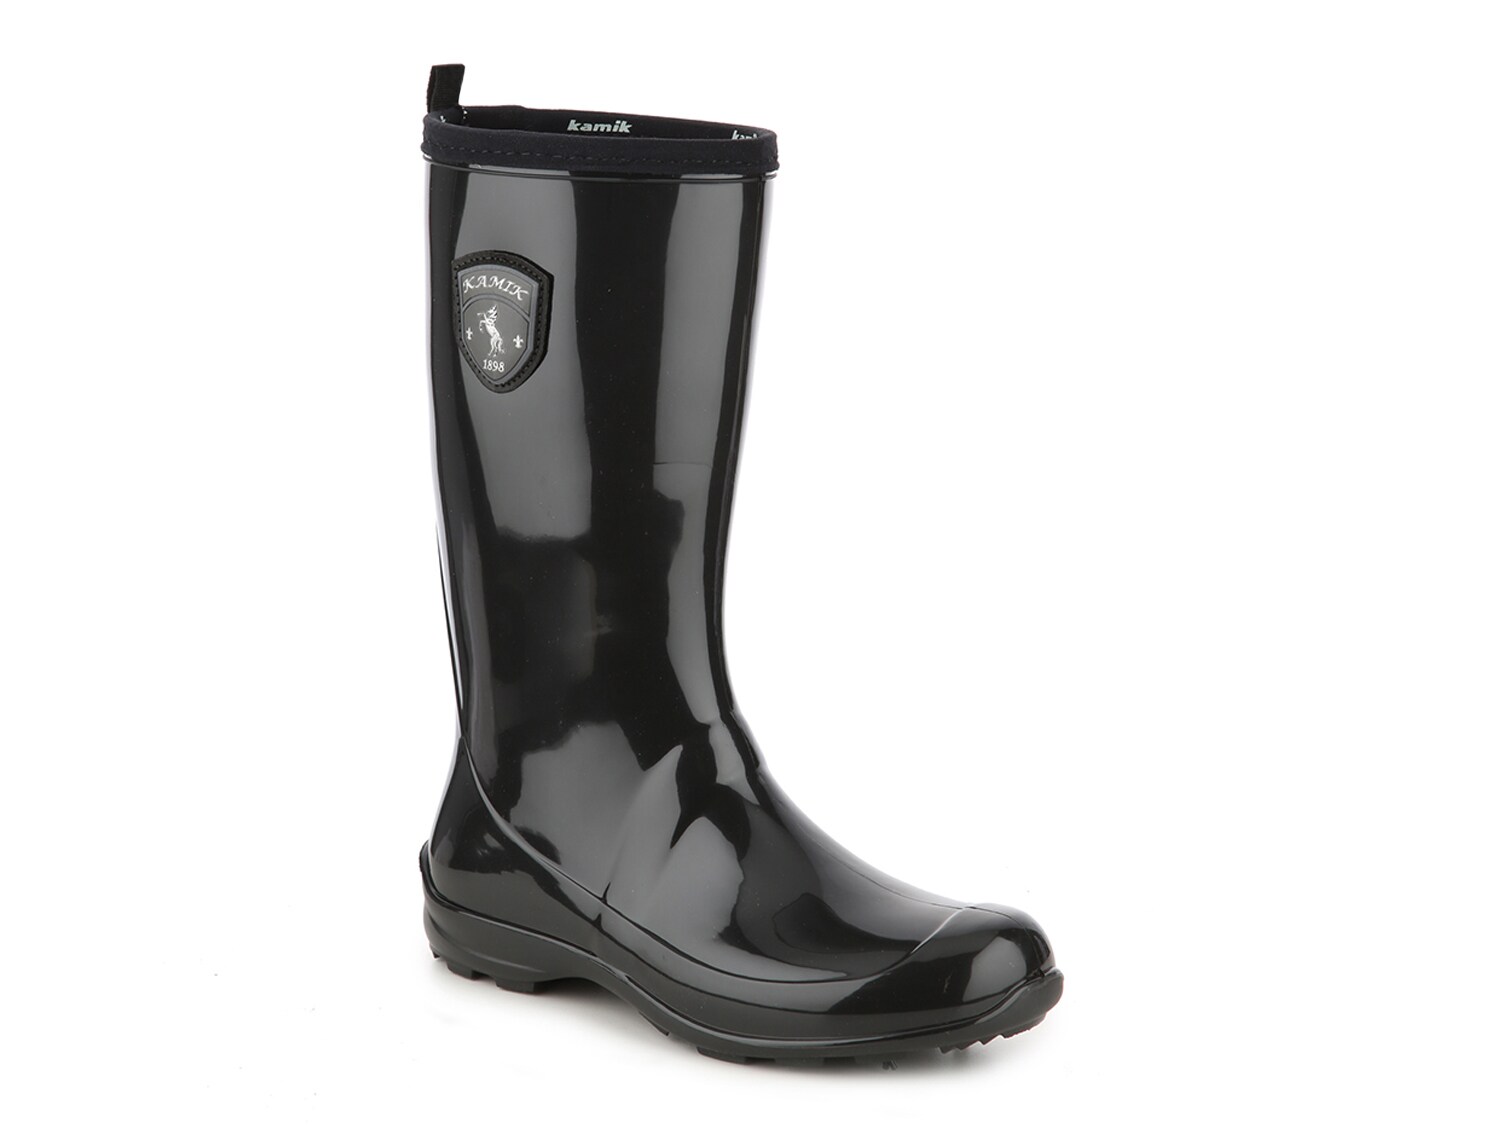 tommy hilfiger rain boots short